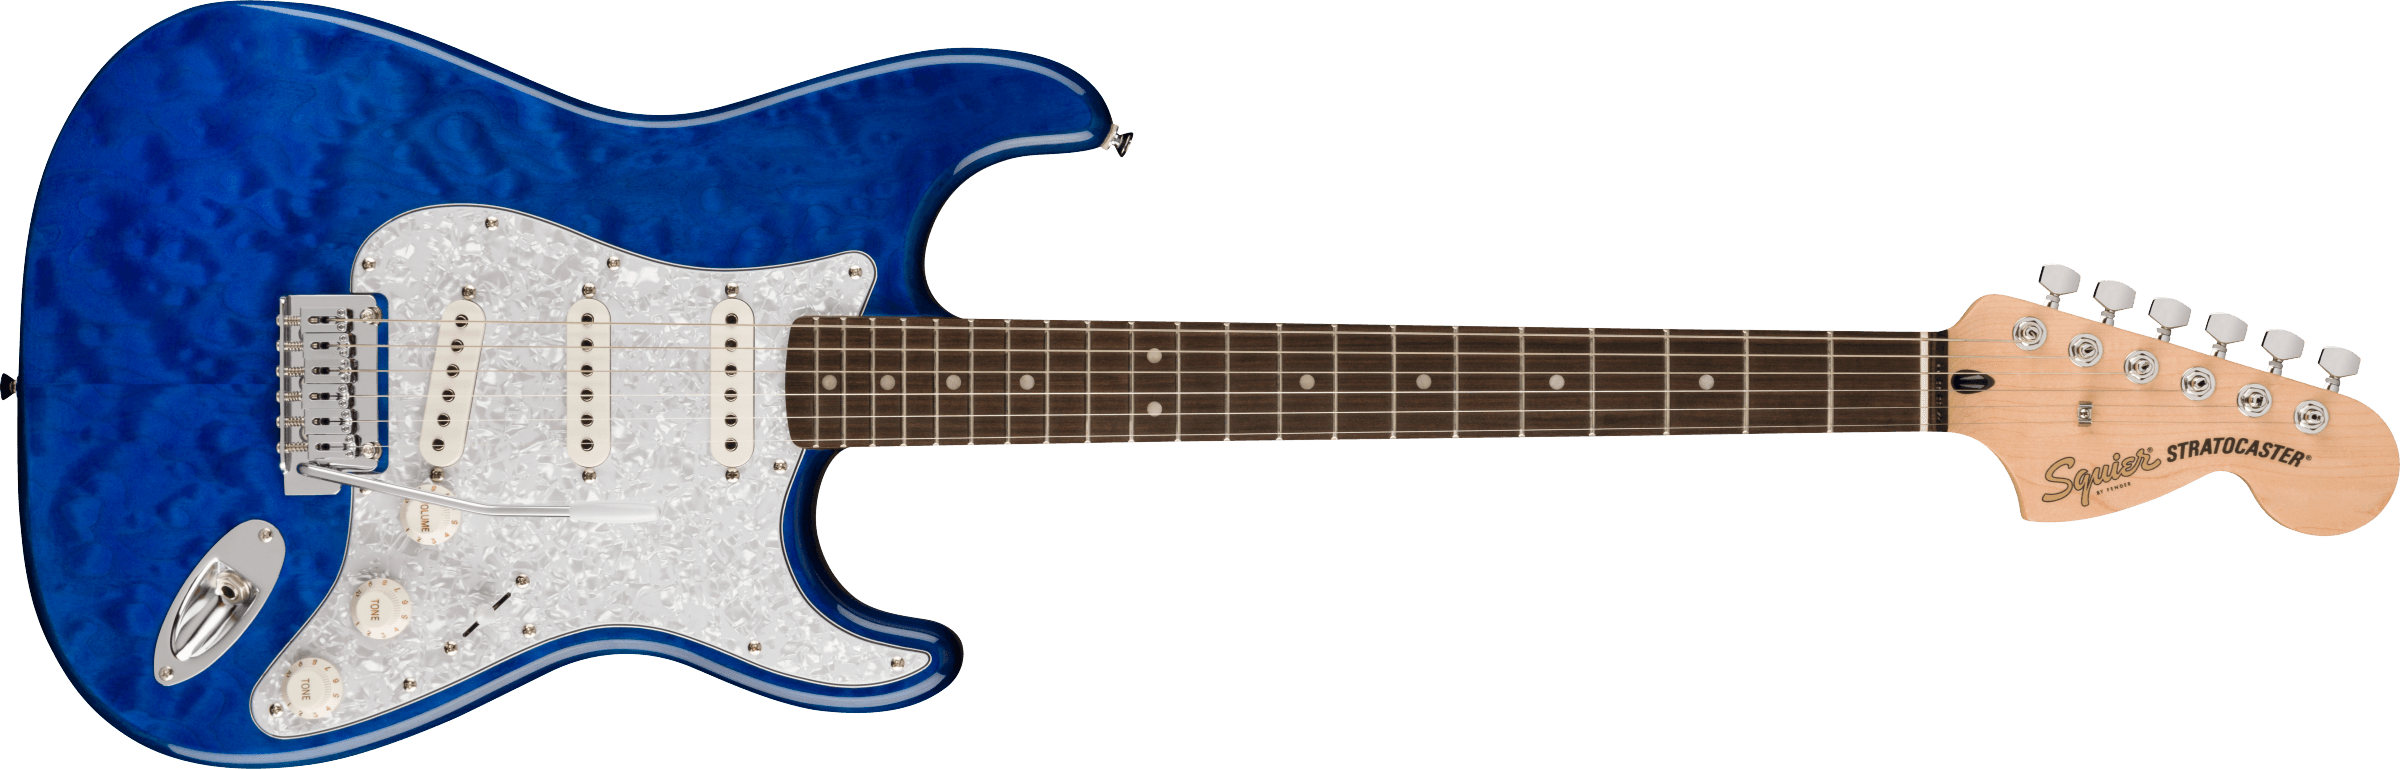 Squier FSR Affinity Series Stratocaster QMT, Laurel Fingerboard, White Pearloid Pickguard, Sapphire Blue Transparent